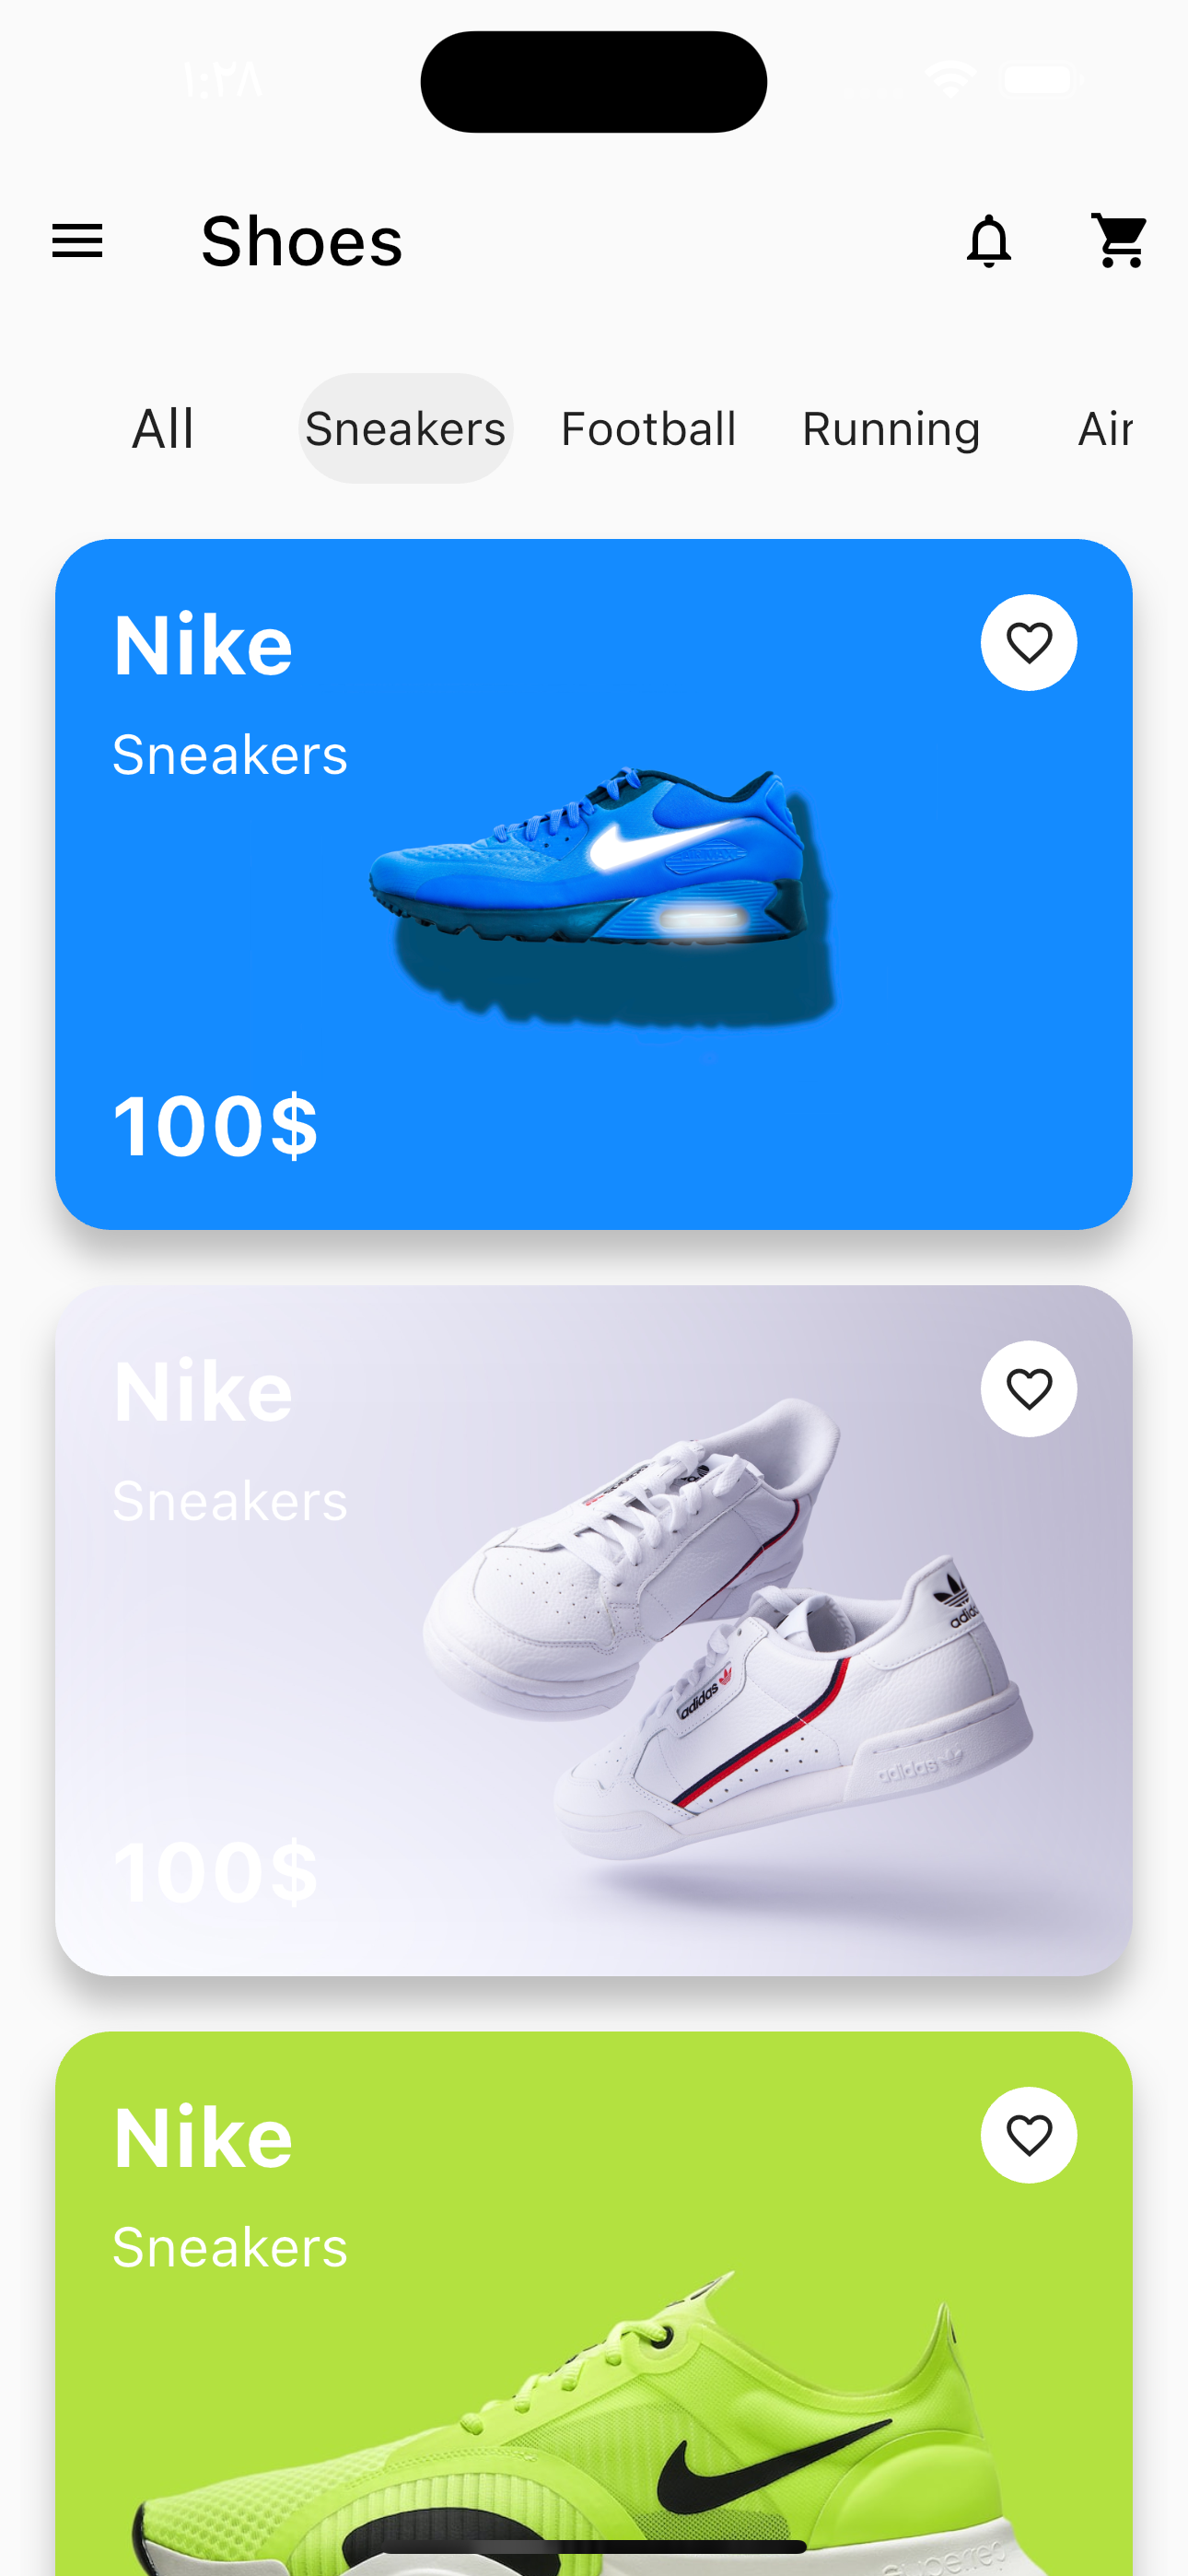 Flutter Nike Shoes Shop Application UI Design and Animation